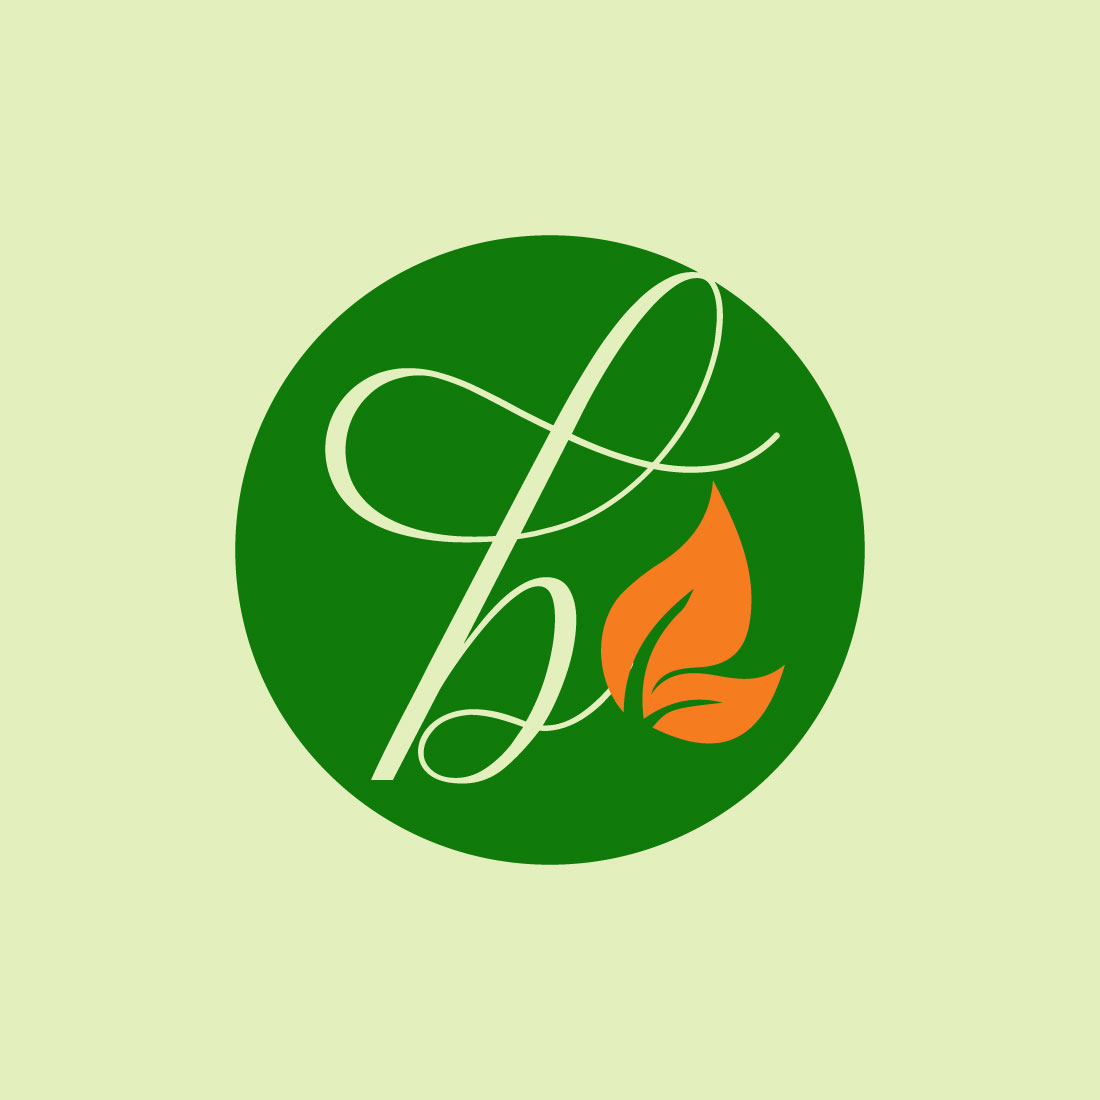 Free b floral alphabet logo cover image.